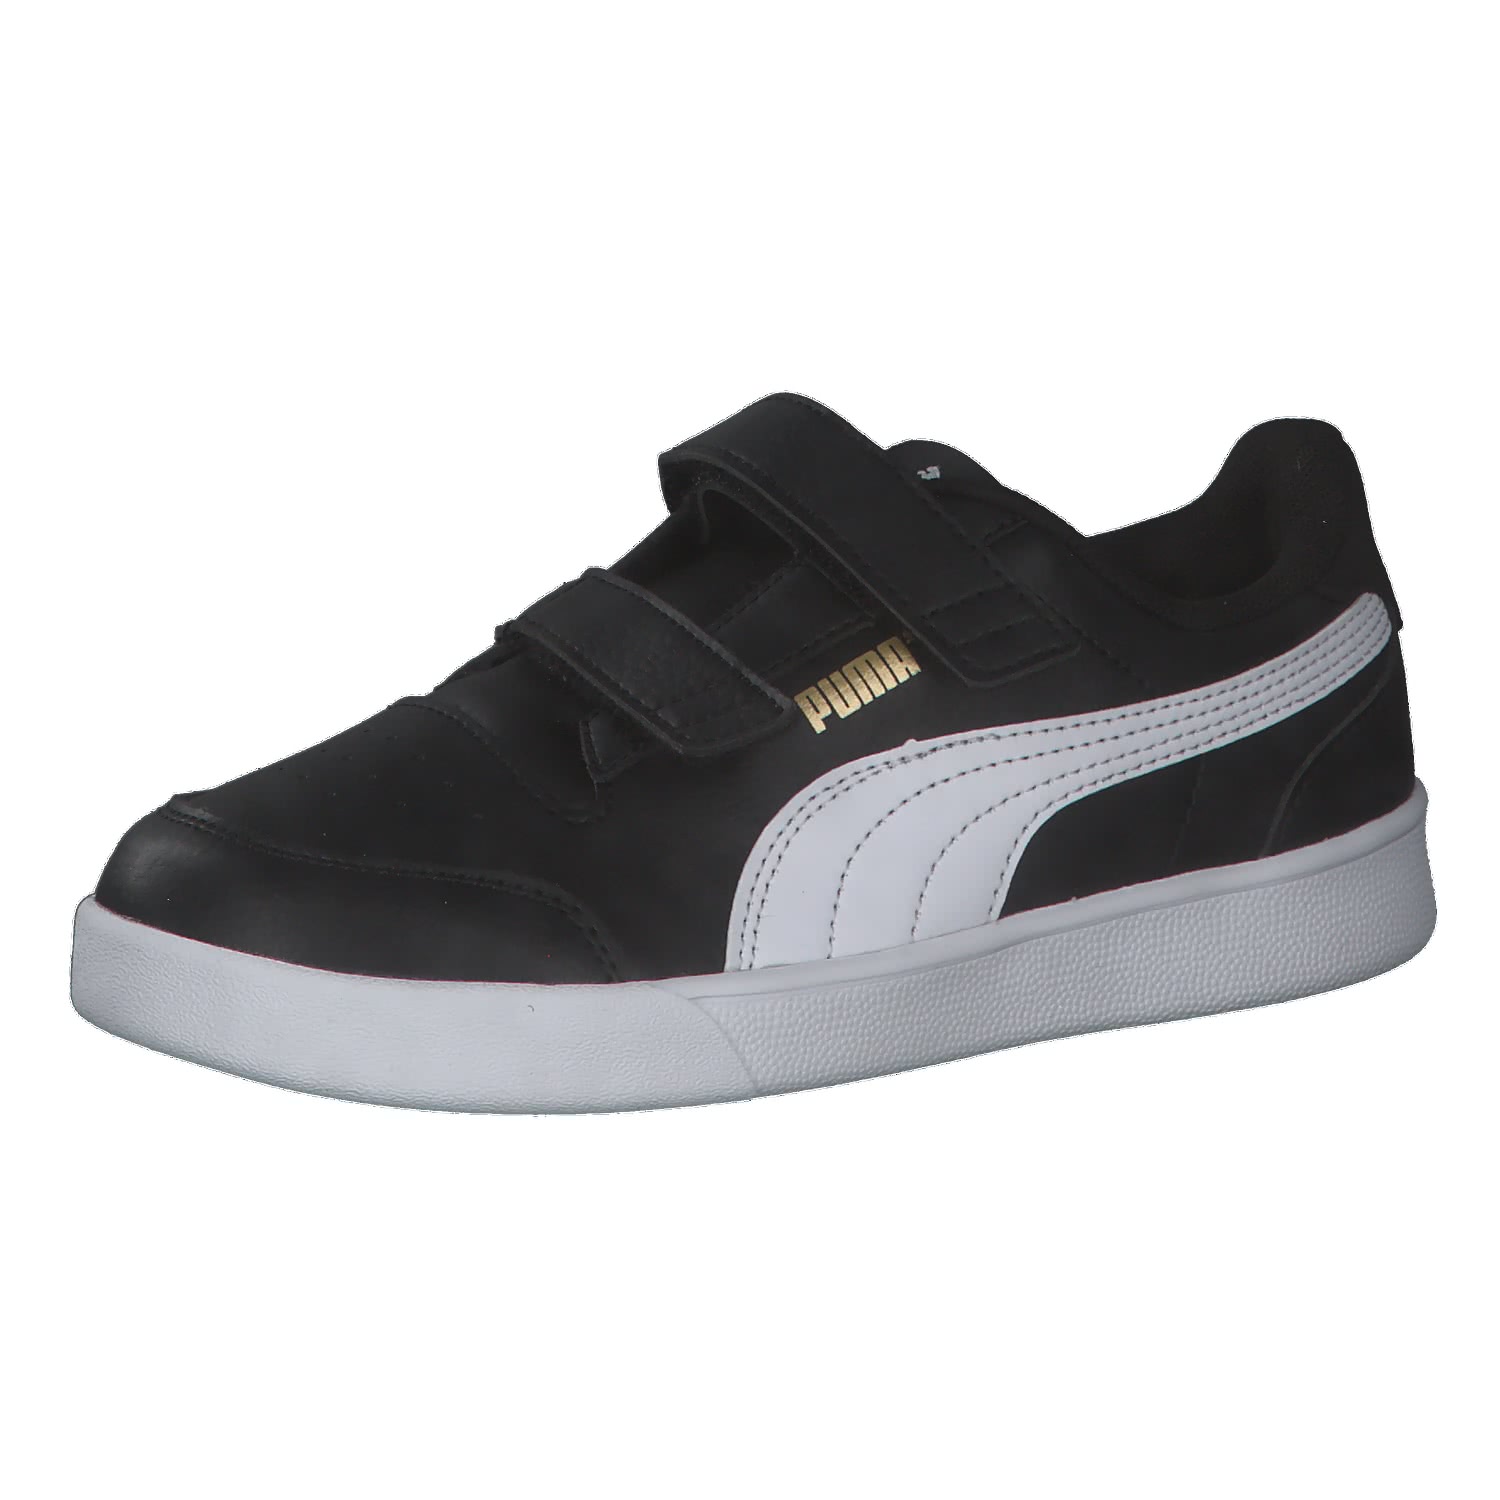 Puma Kinder Sneaker Shuffle V PS 375689 | eBay